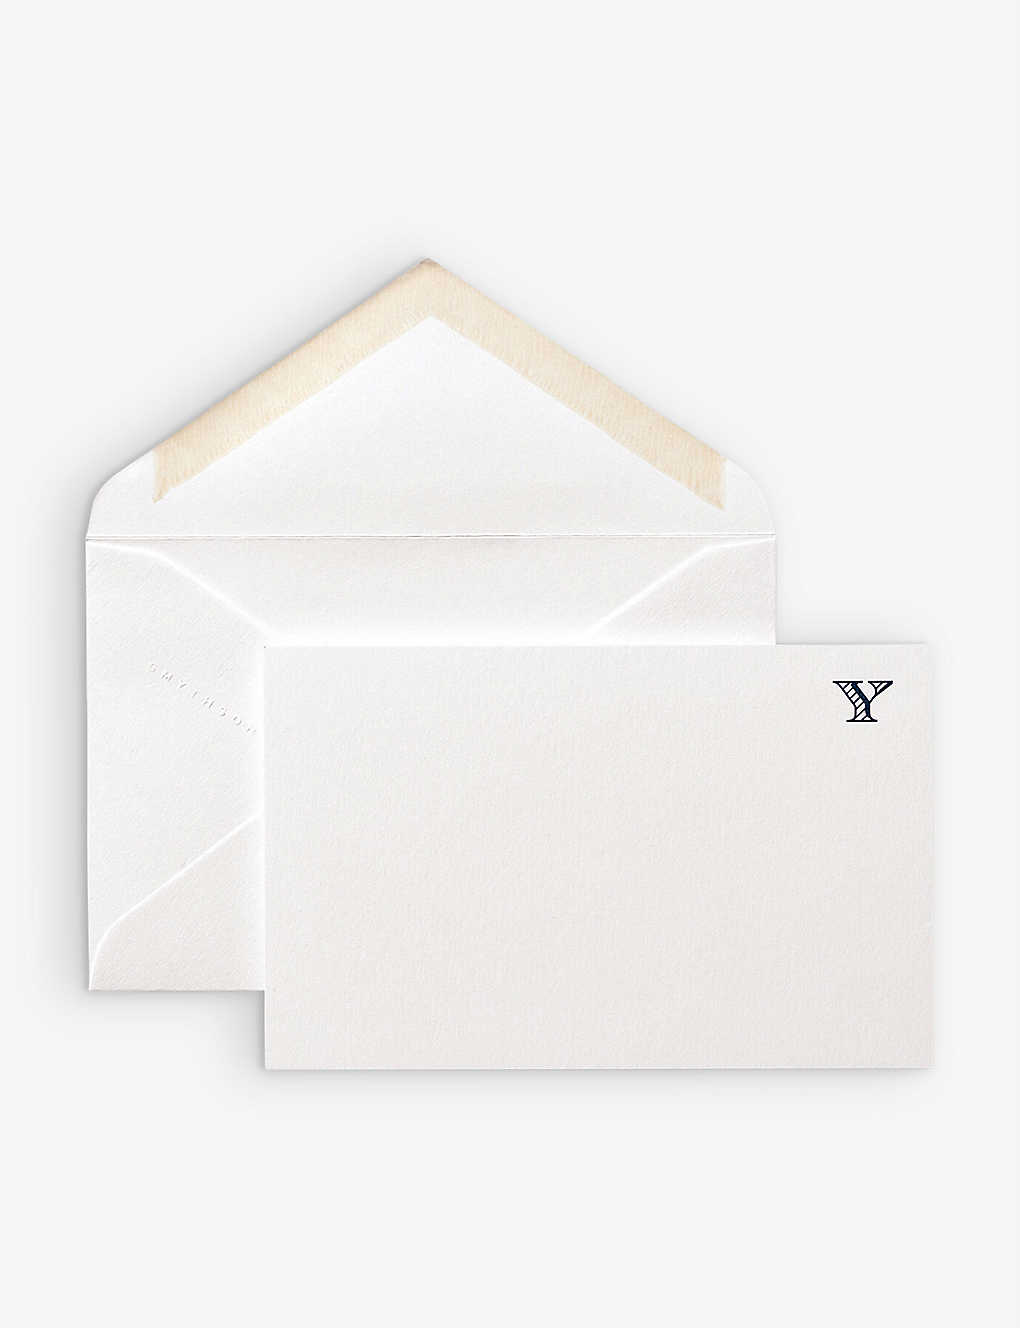 SMYTHSON Yエングレーブ ホワイト ウォーブ カード 10枚ボックス ‘Y’-engraved white wove cards box of ten #WHITE